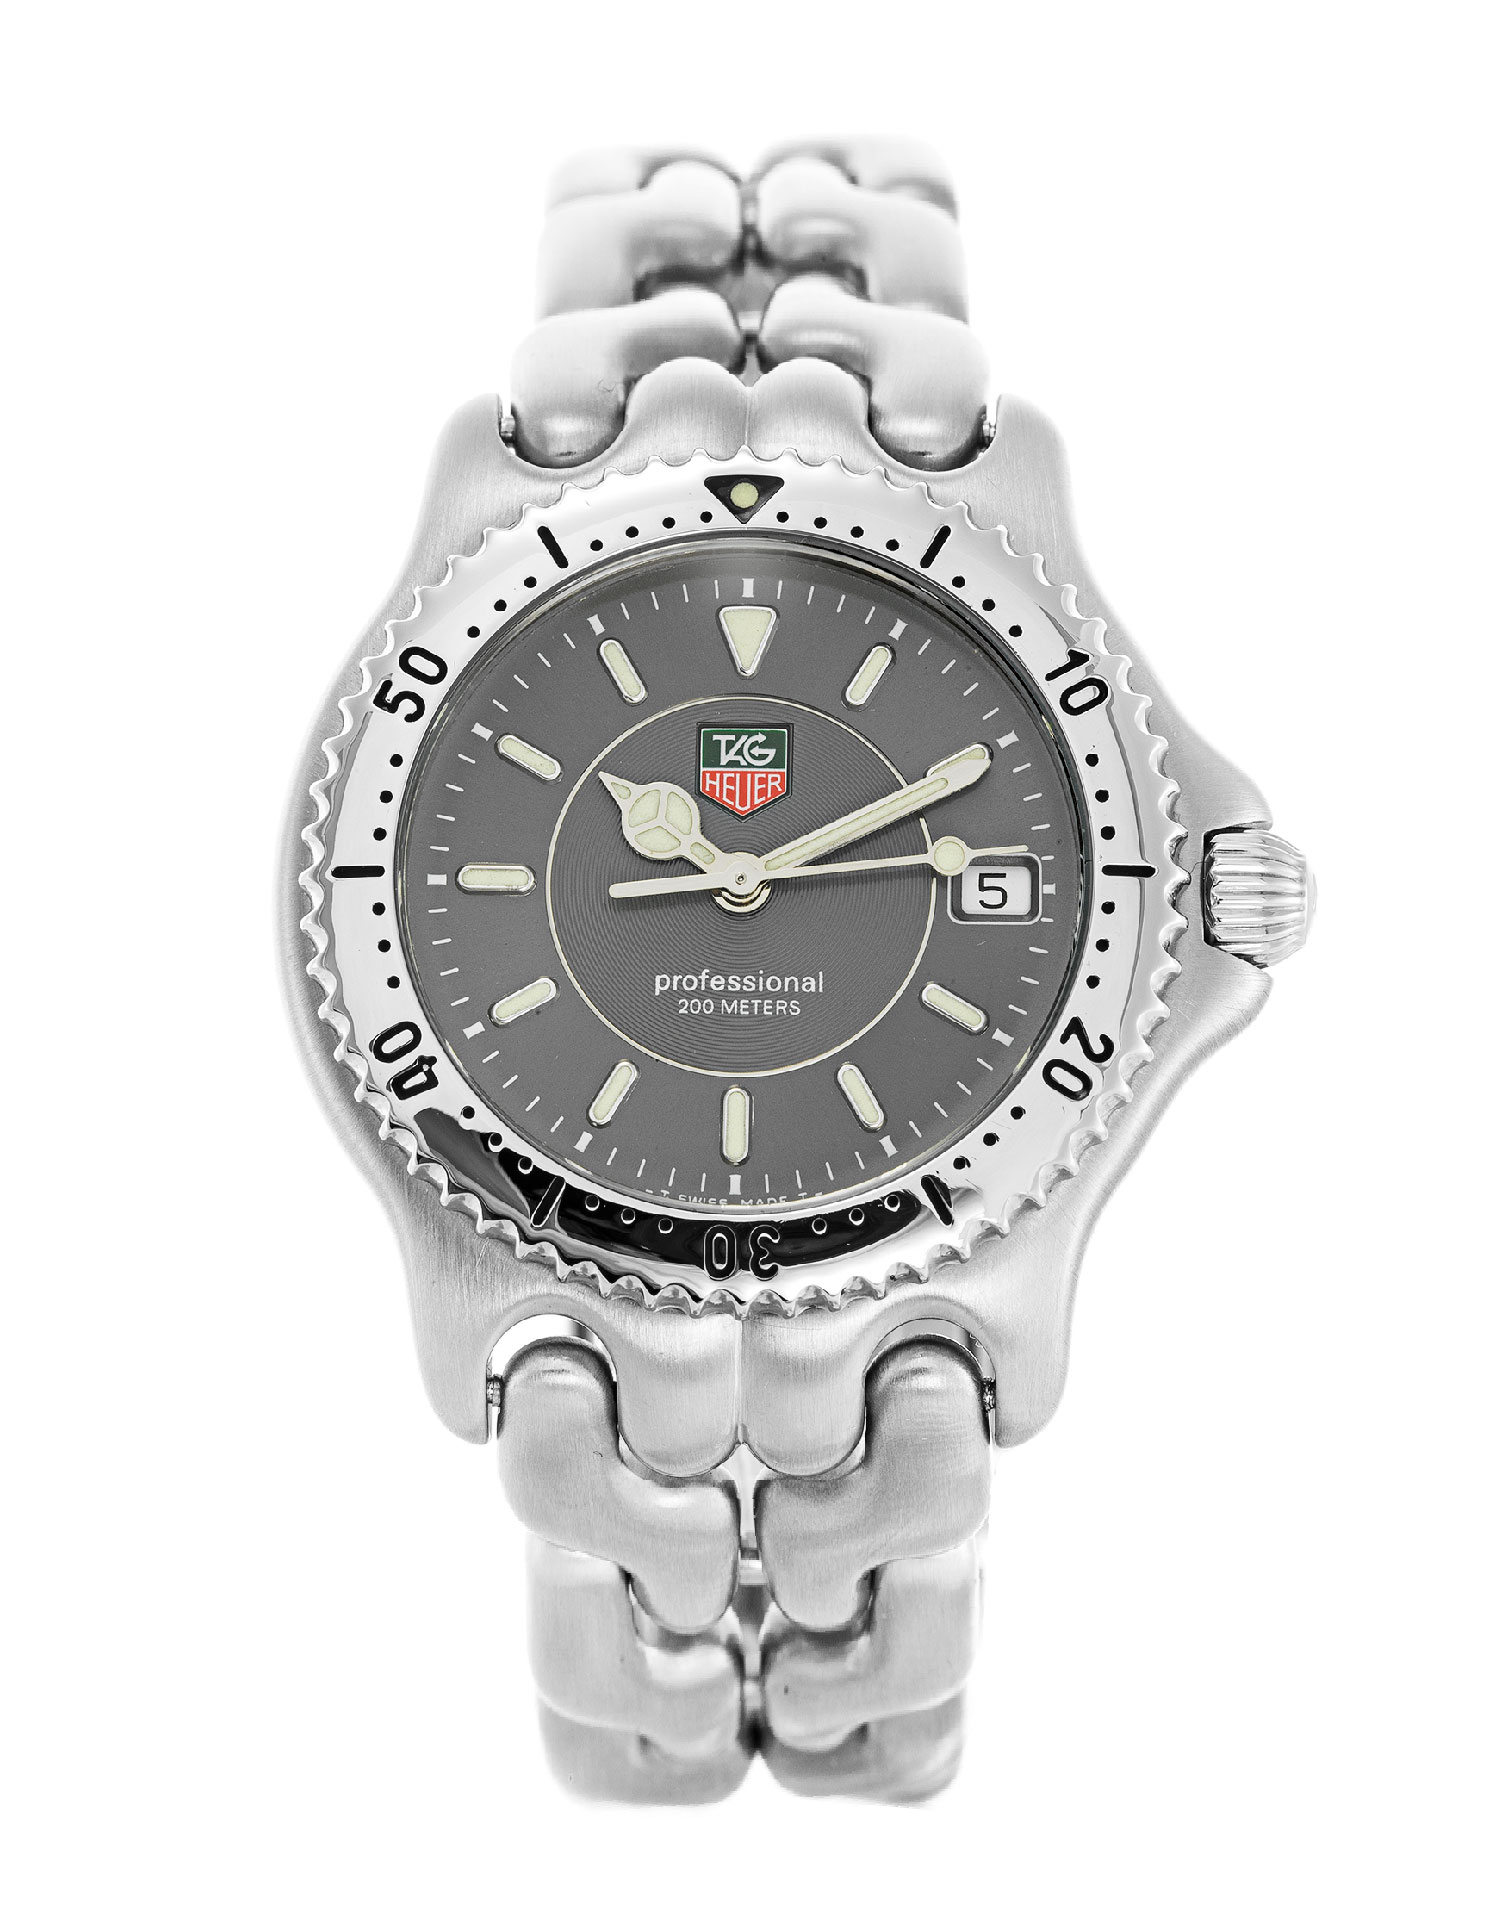 TAG HEUER WG1213-KO 時計 professional 200m - ブランド腕時計